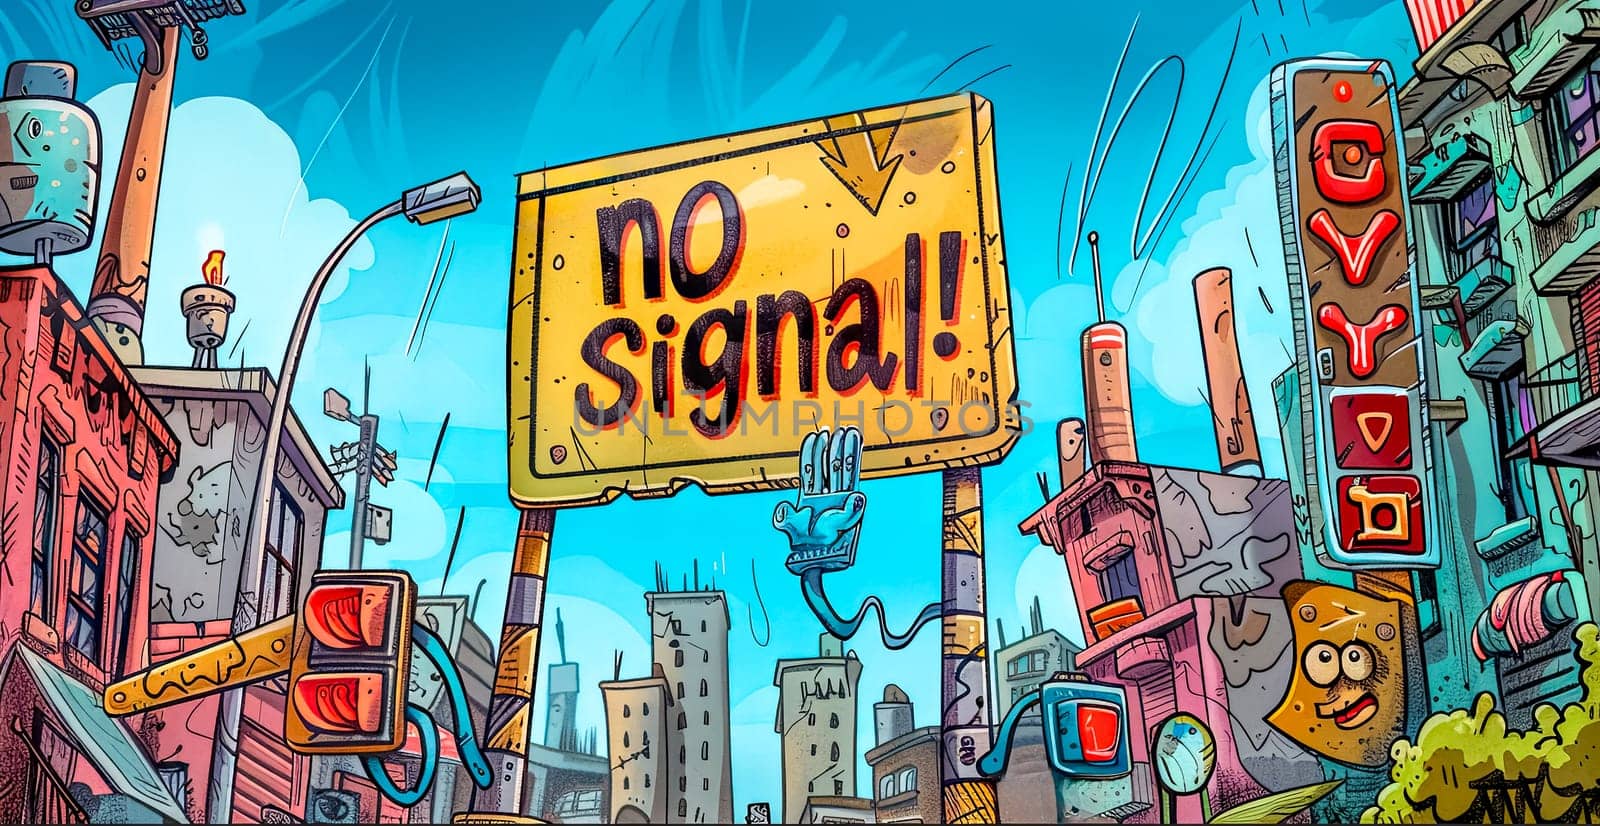 No signal urban cartoon illustration by Edophoto